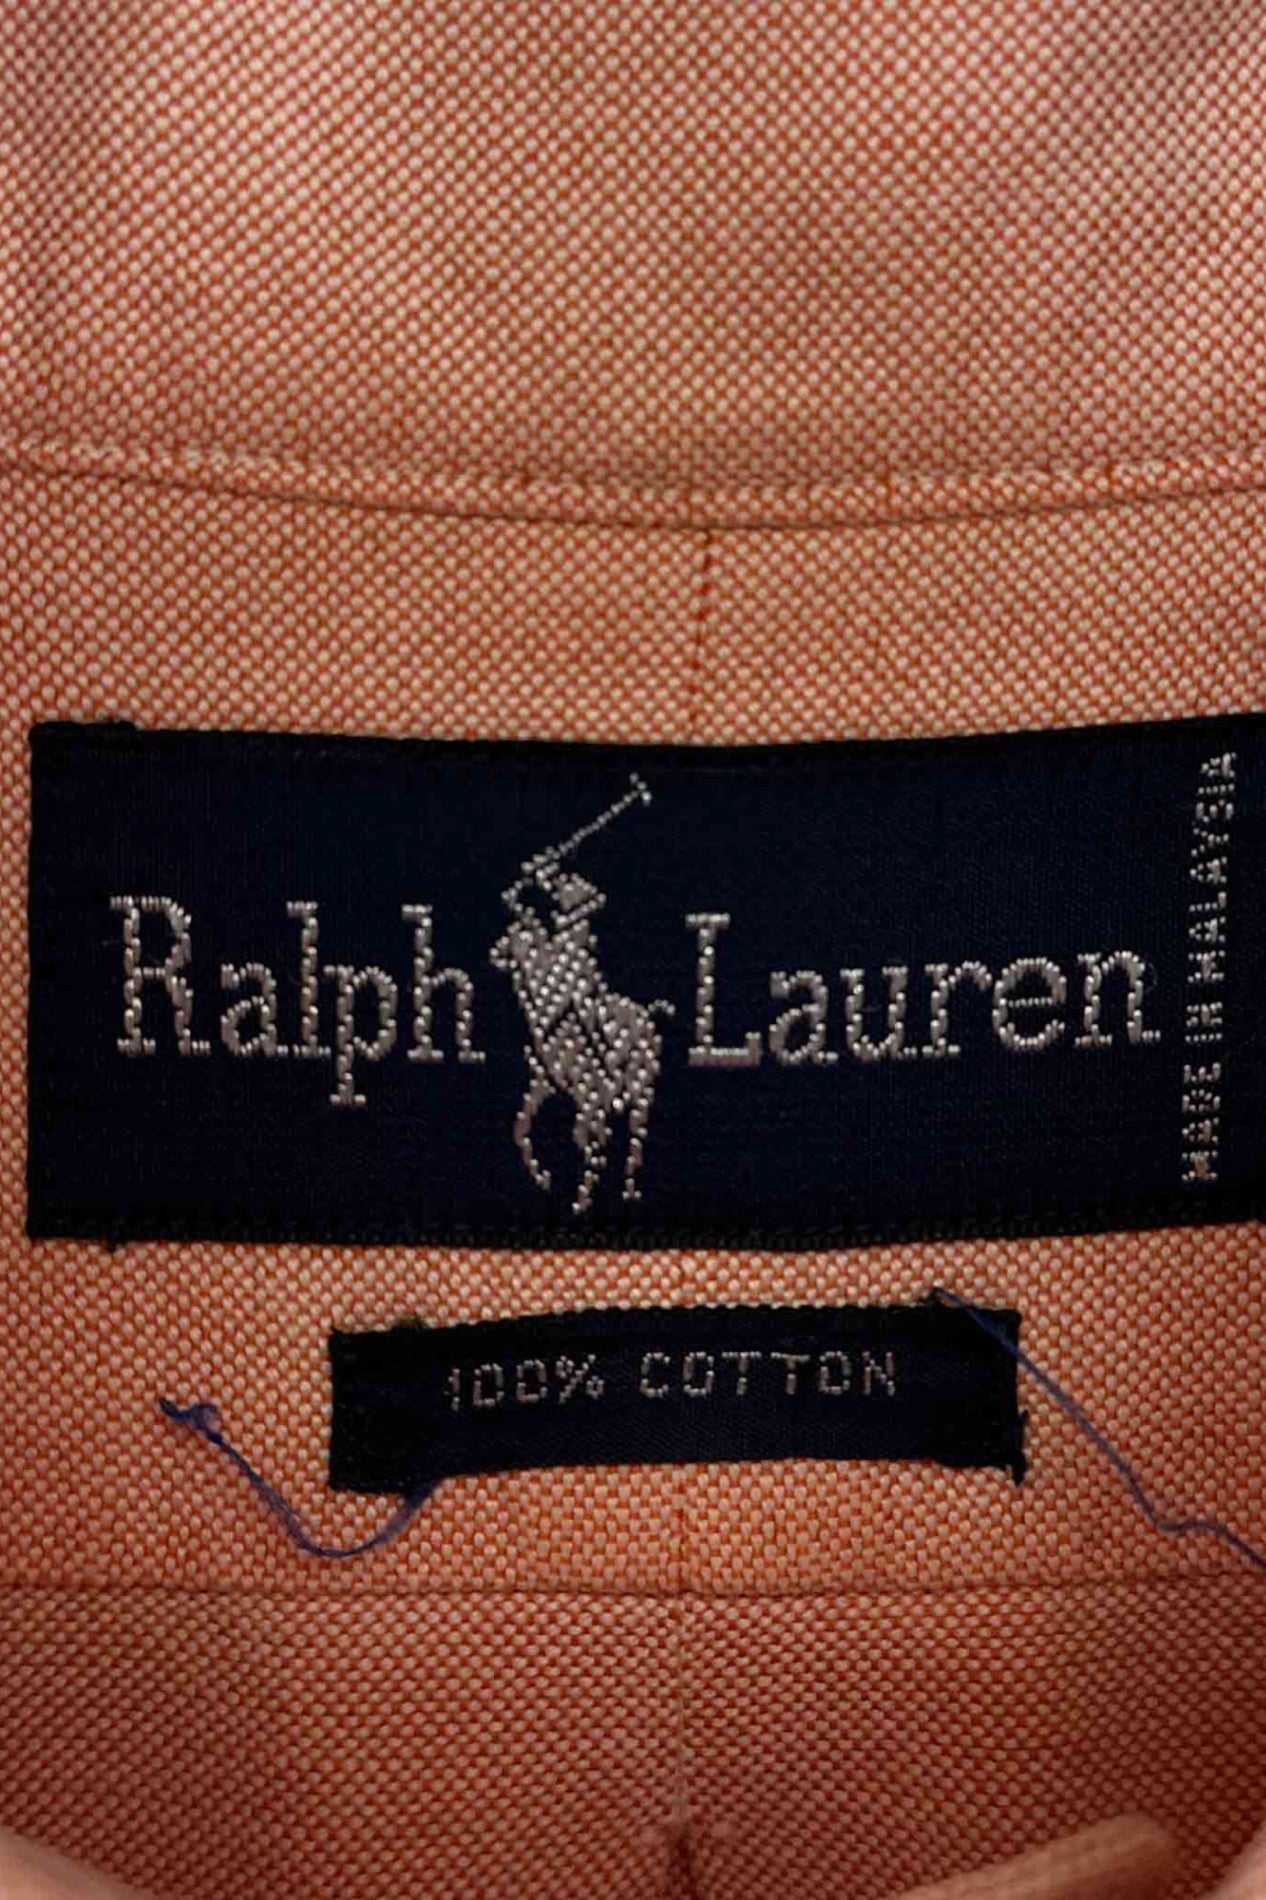 90 年代 Ralph Lauren 橙色衬衫